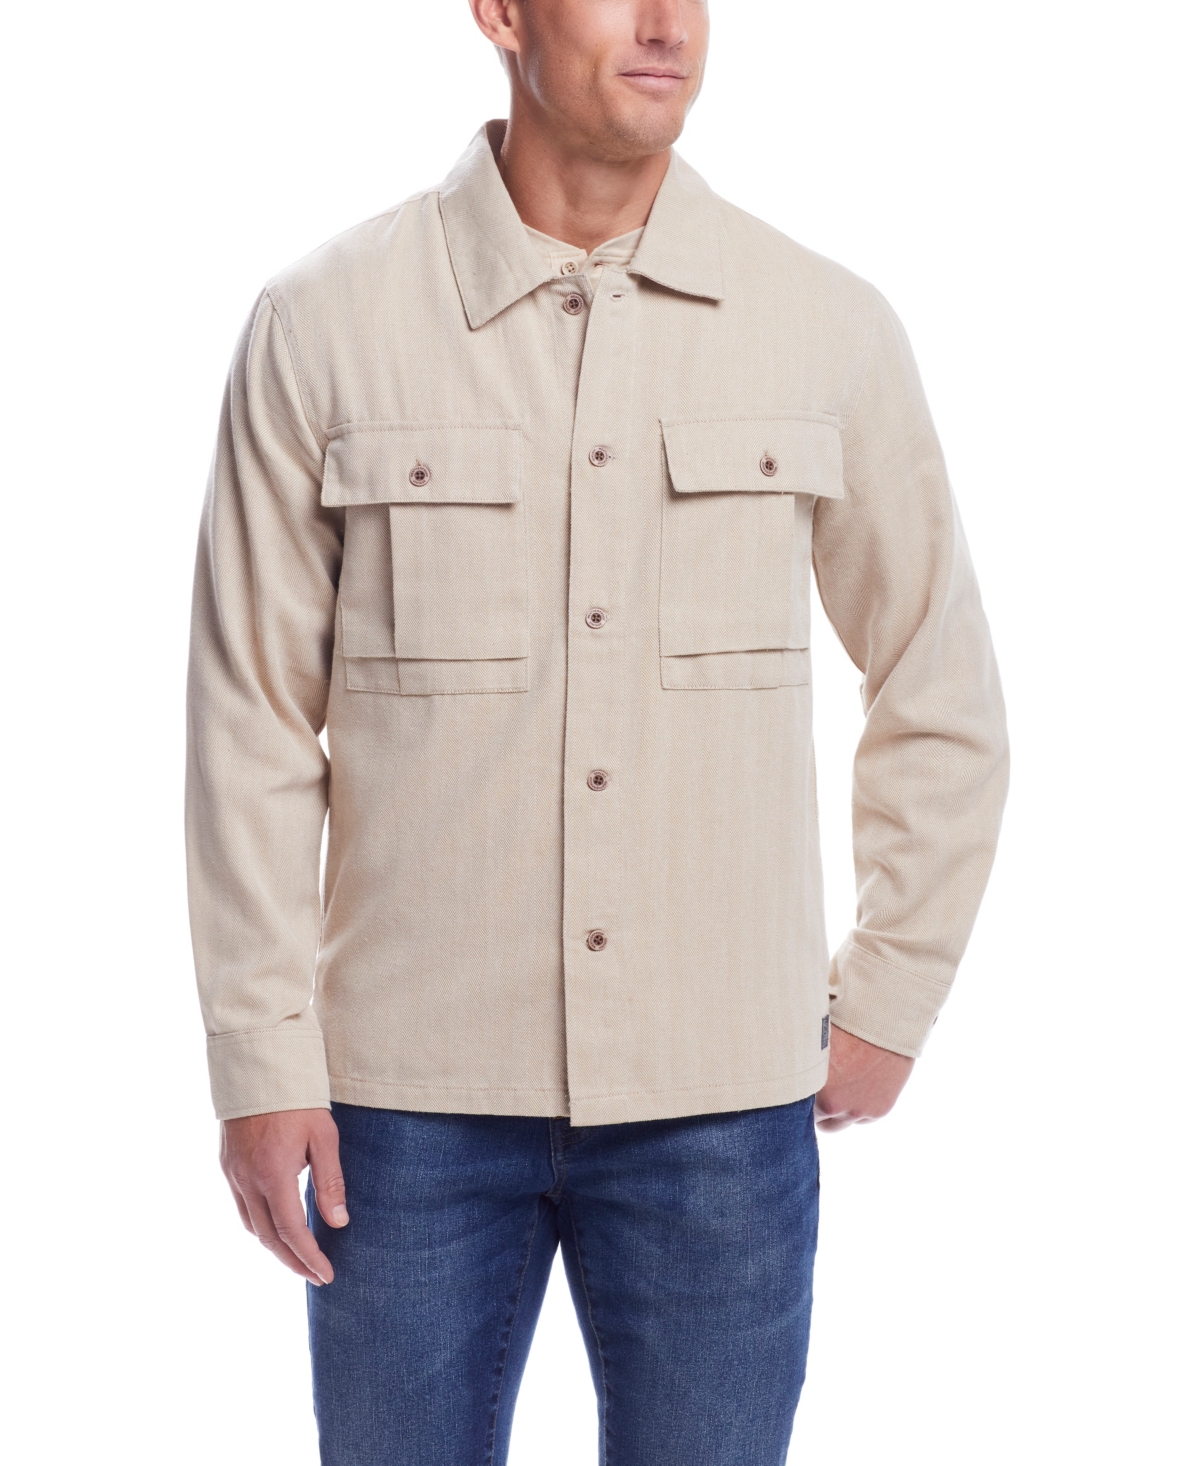 Men's Summer Long Sleeve Shirt Jacket - Navy